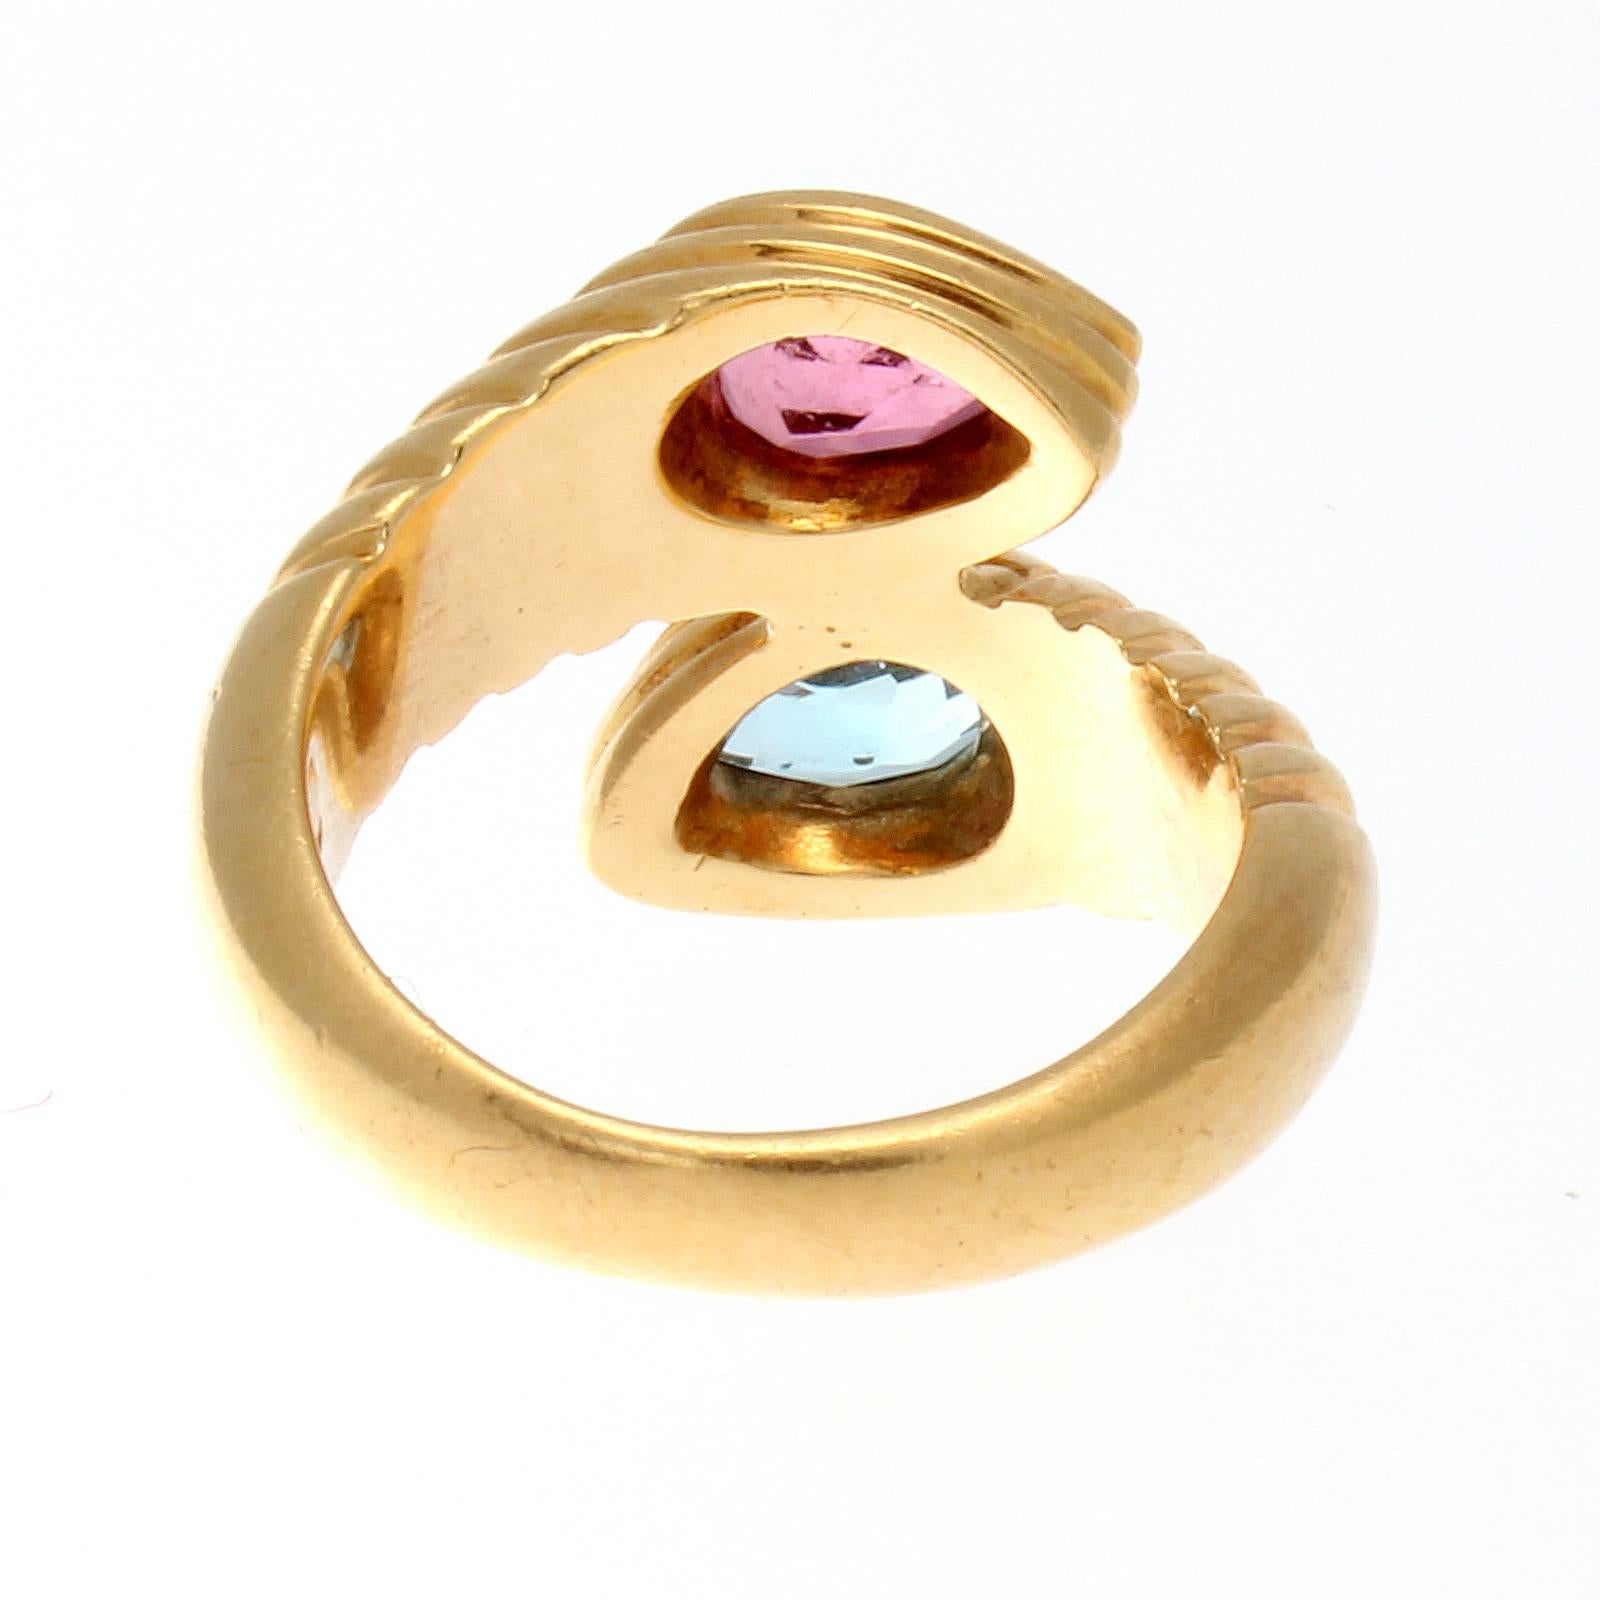 the bulgari two-stone ring